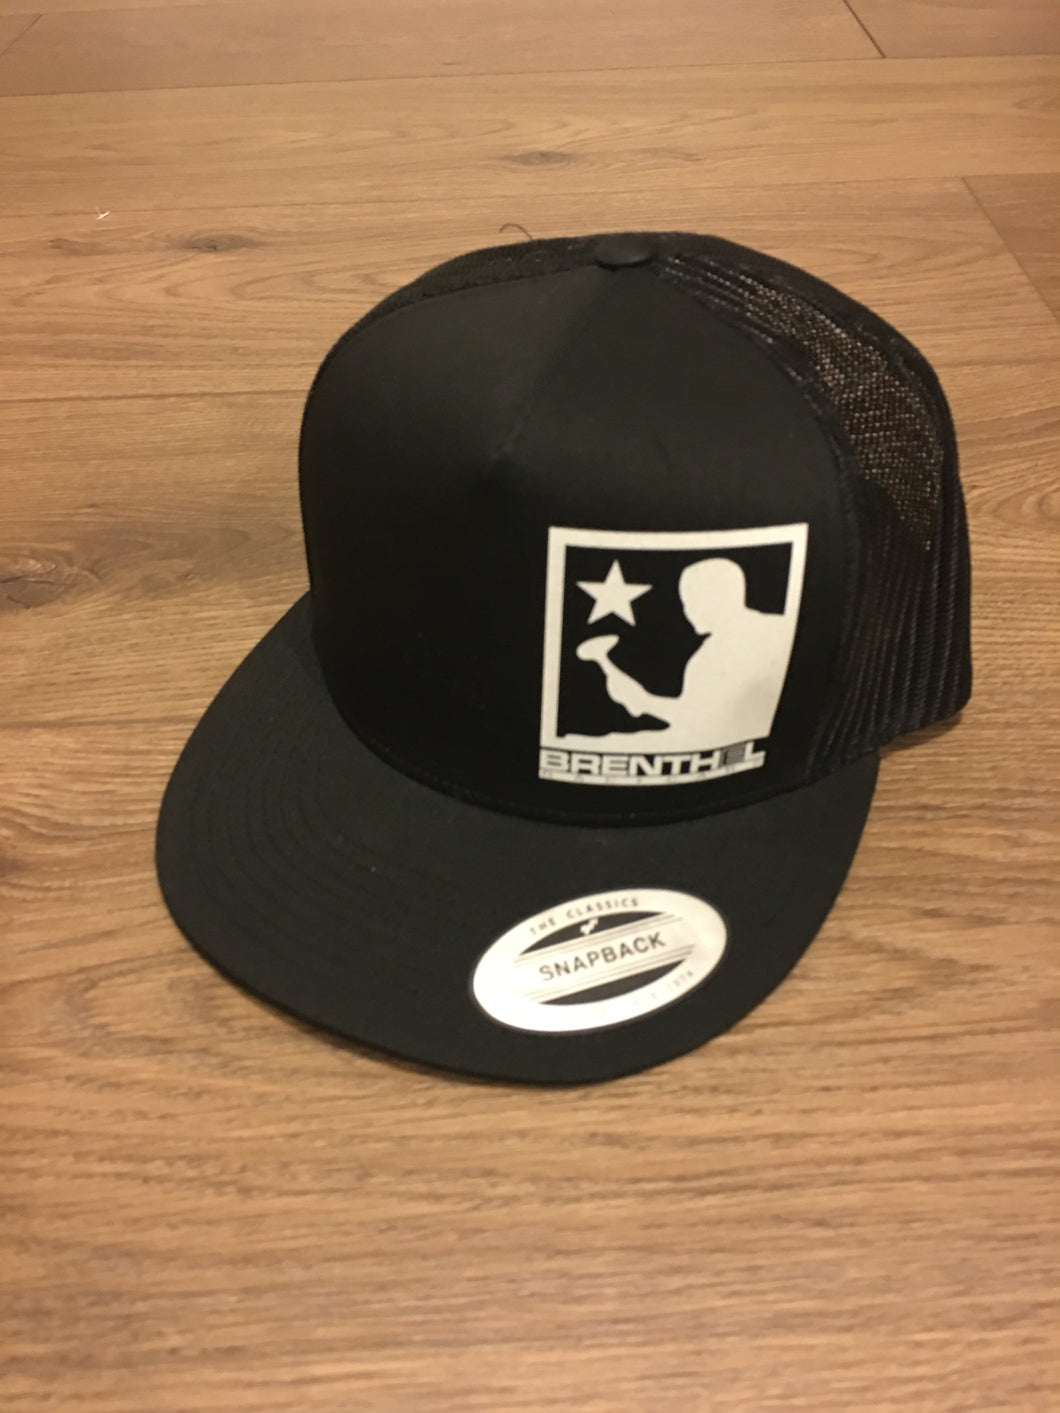 Brenthel SnapBack Hat